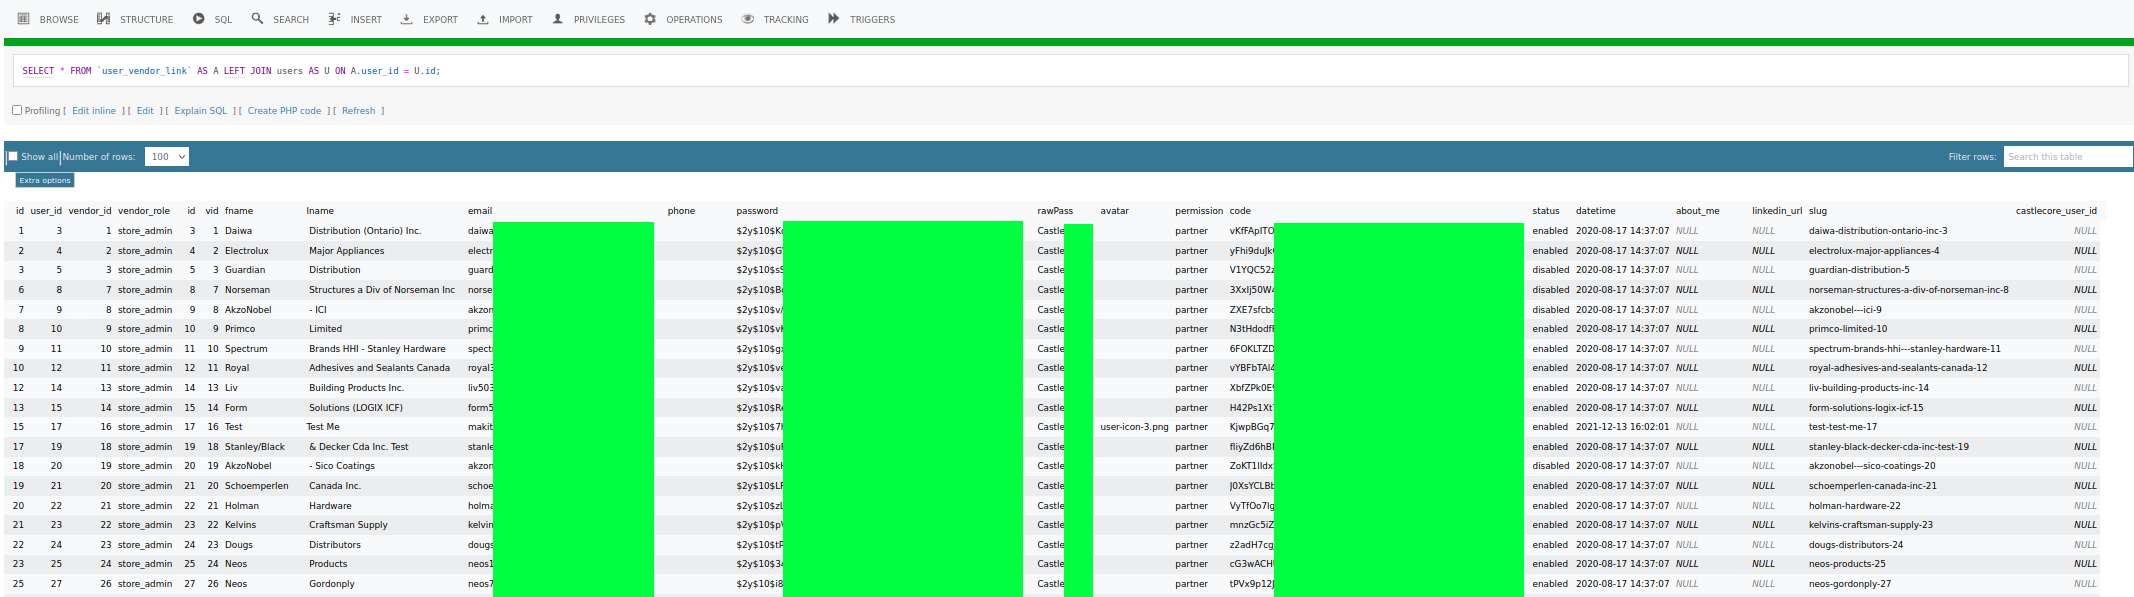 A screenshot of the redacted user-vendor list